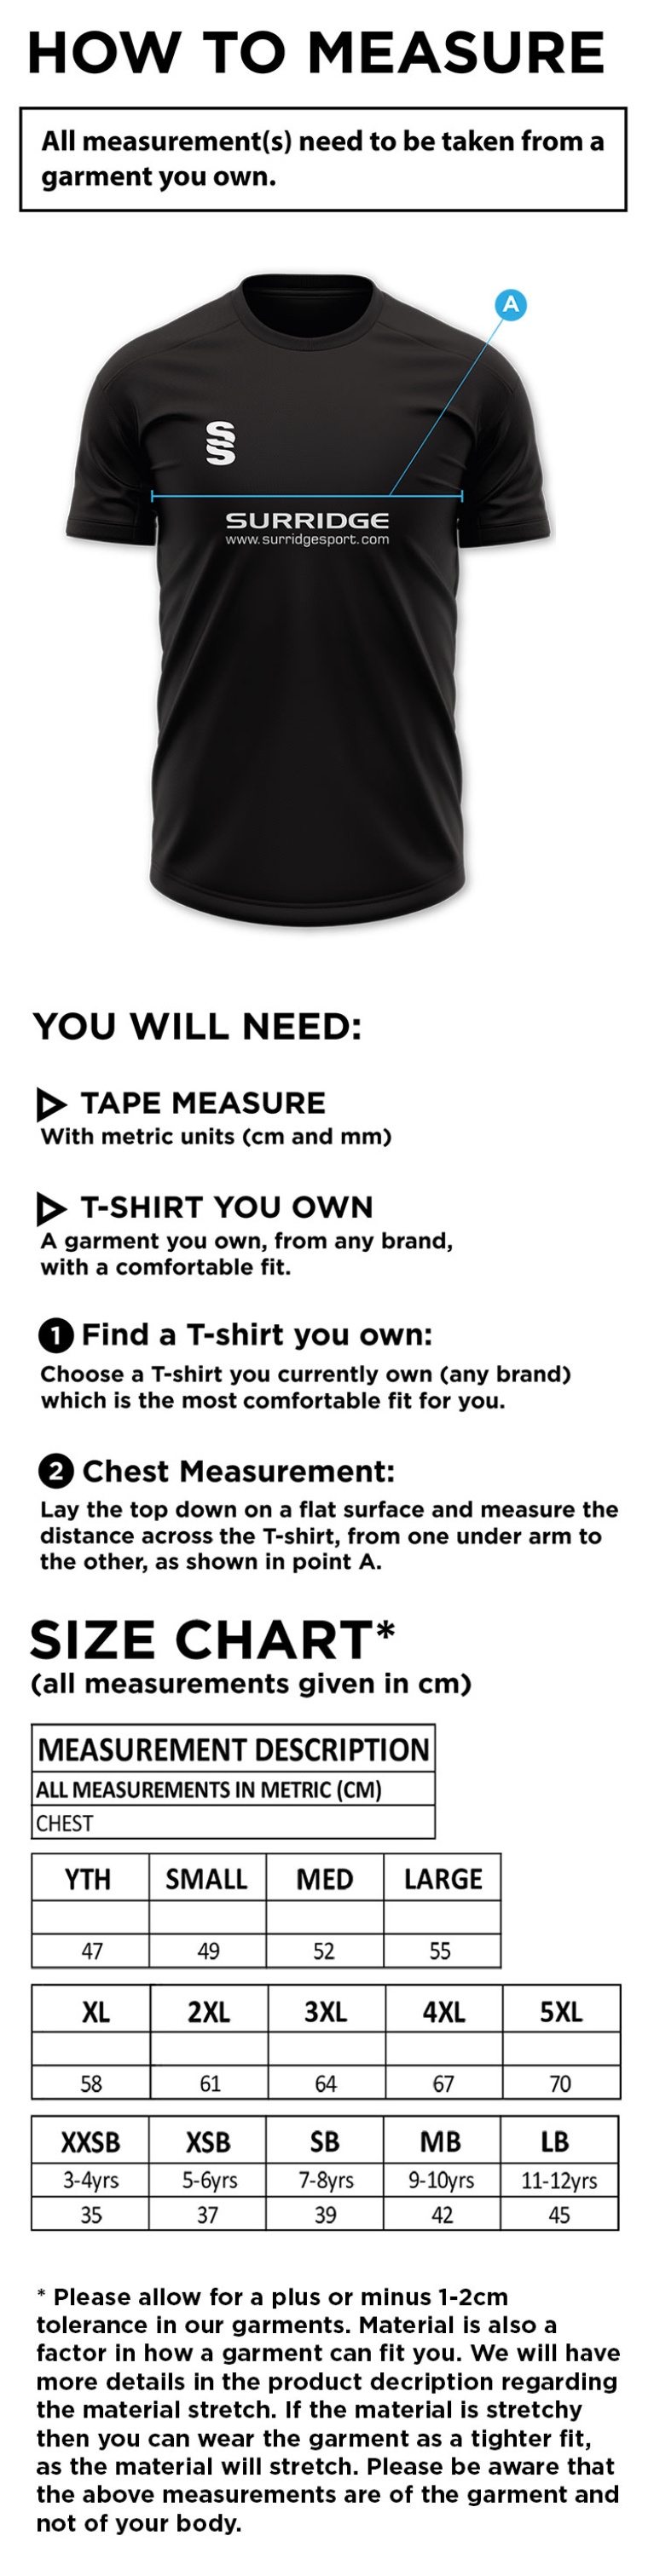 Women's Blade Polo Shirt : Black/Amber/White - Size Guide